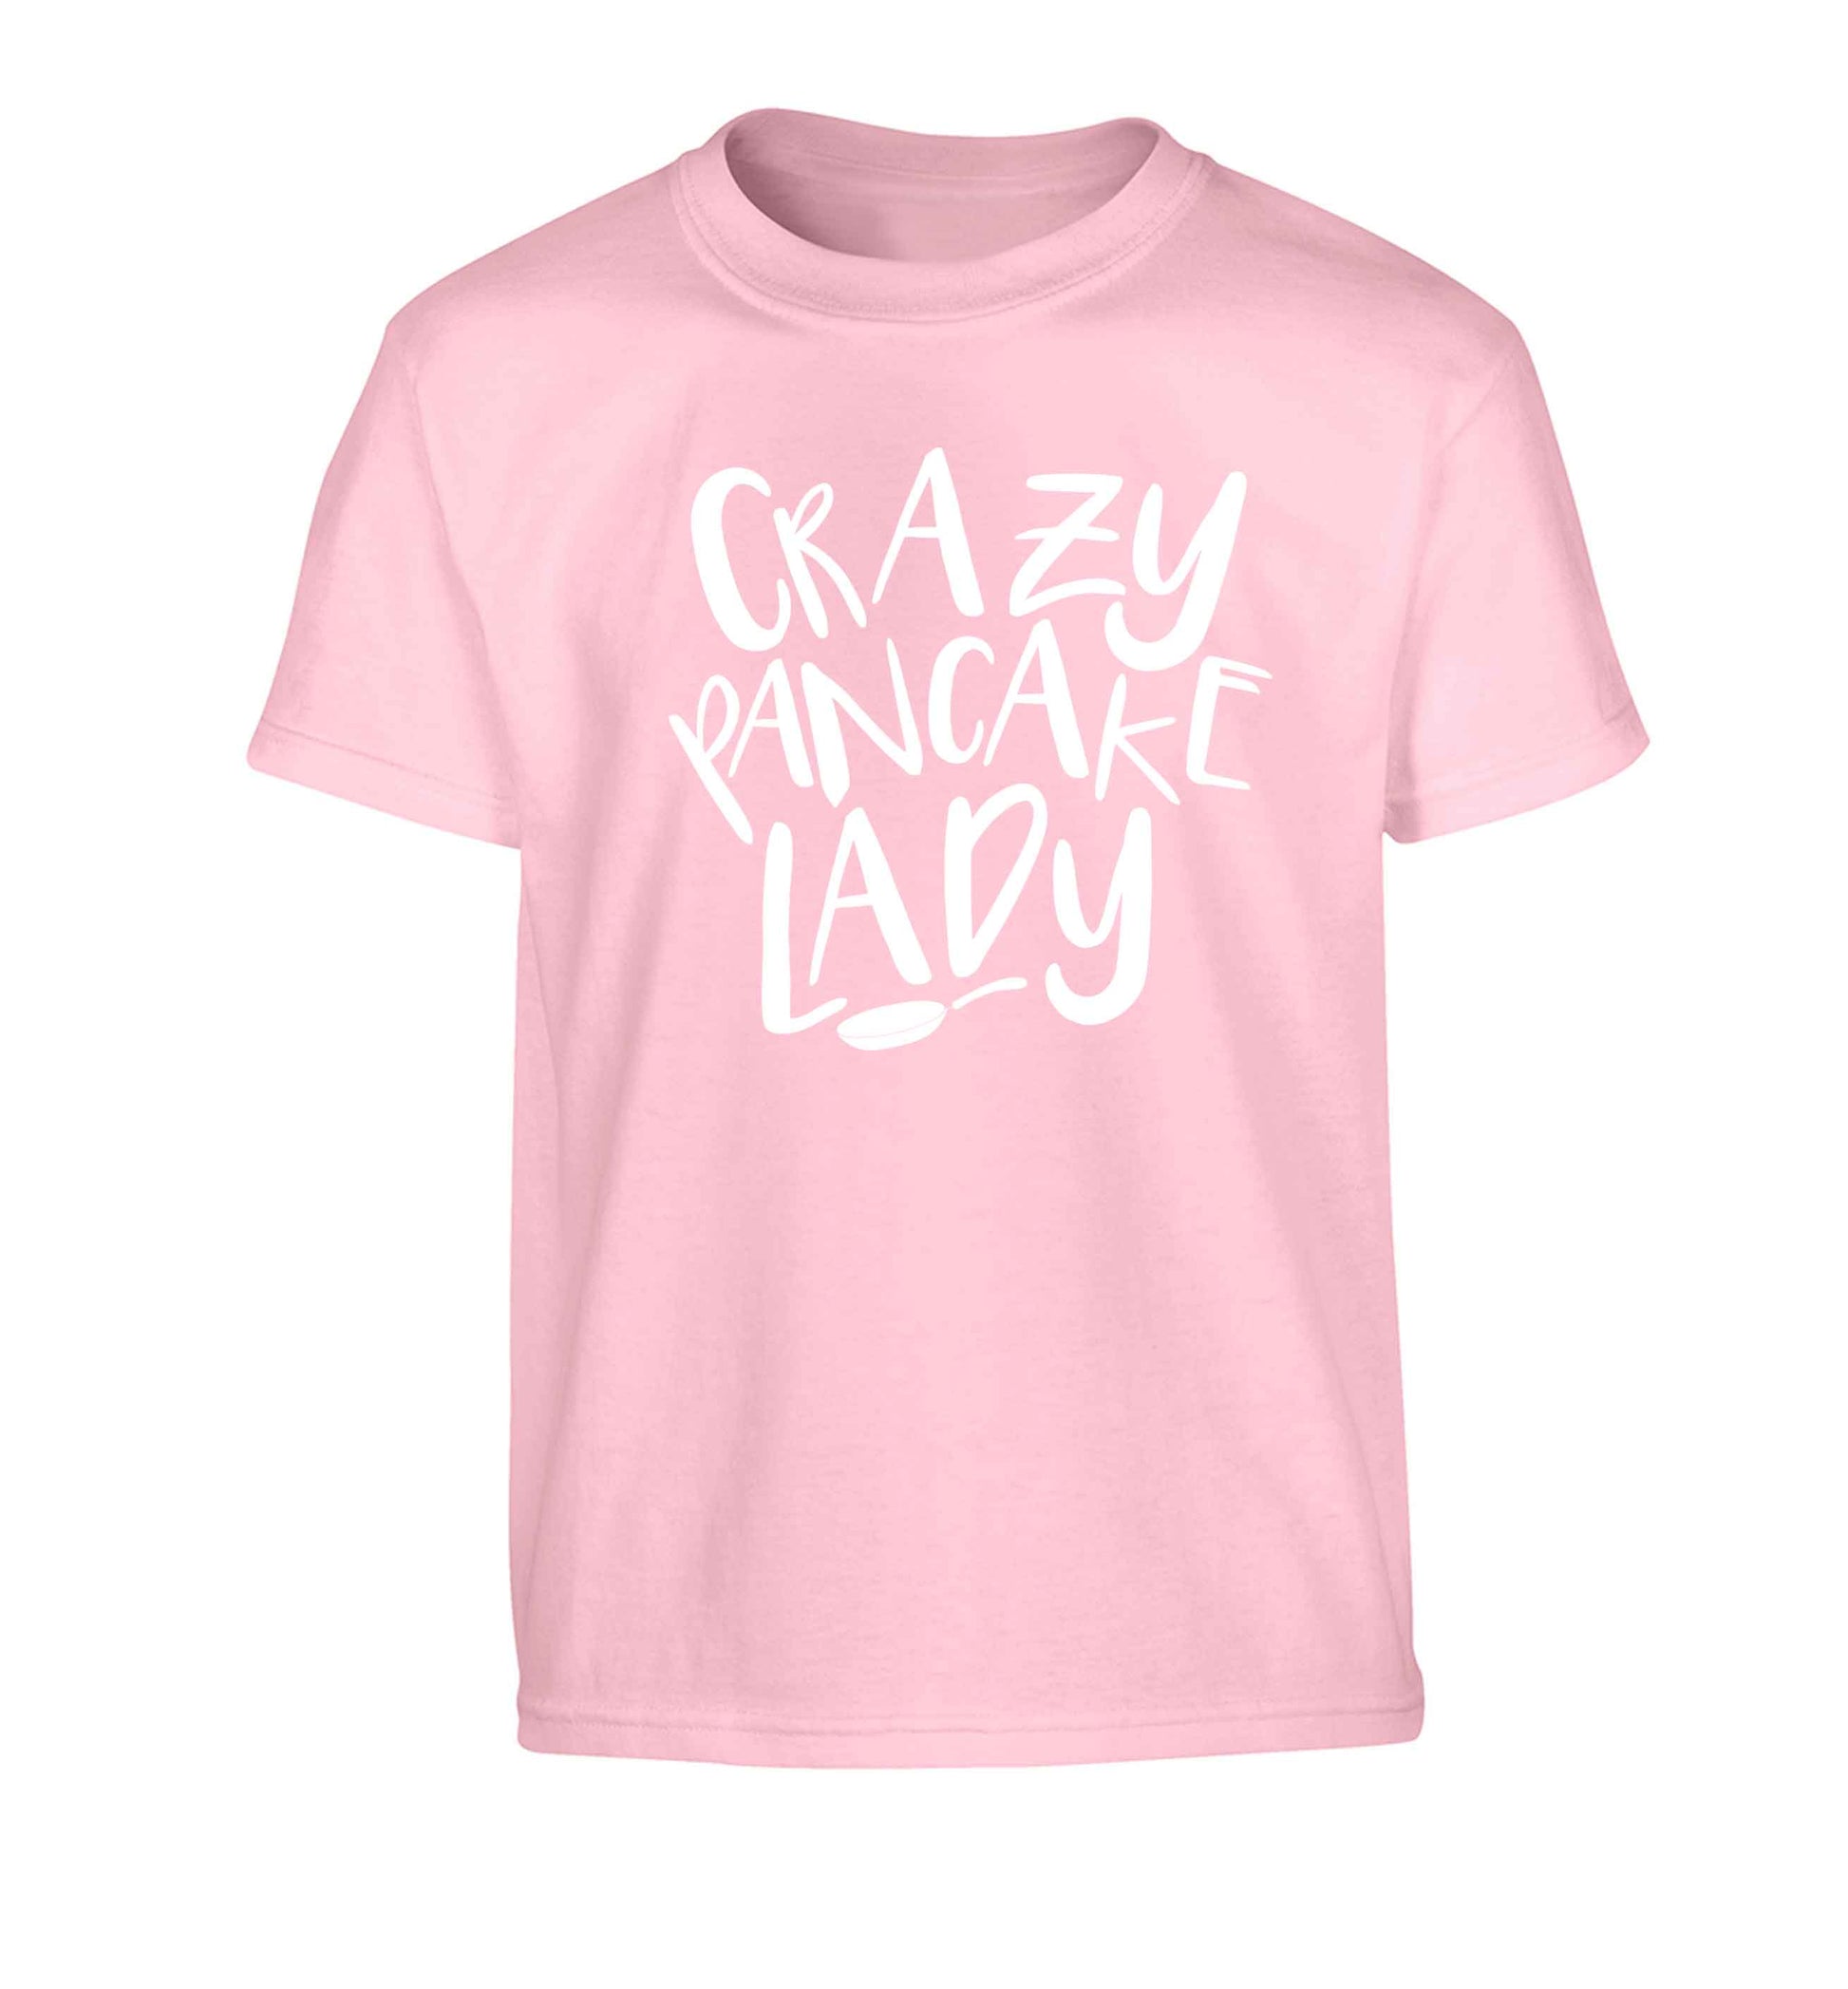 Crazy pancake lady Children's light pink Tshirt 12-13 Years